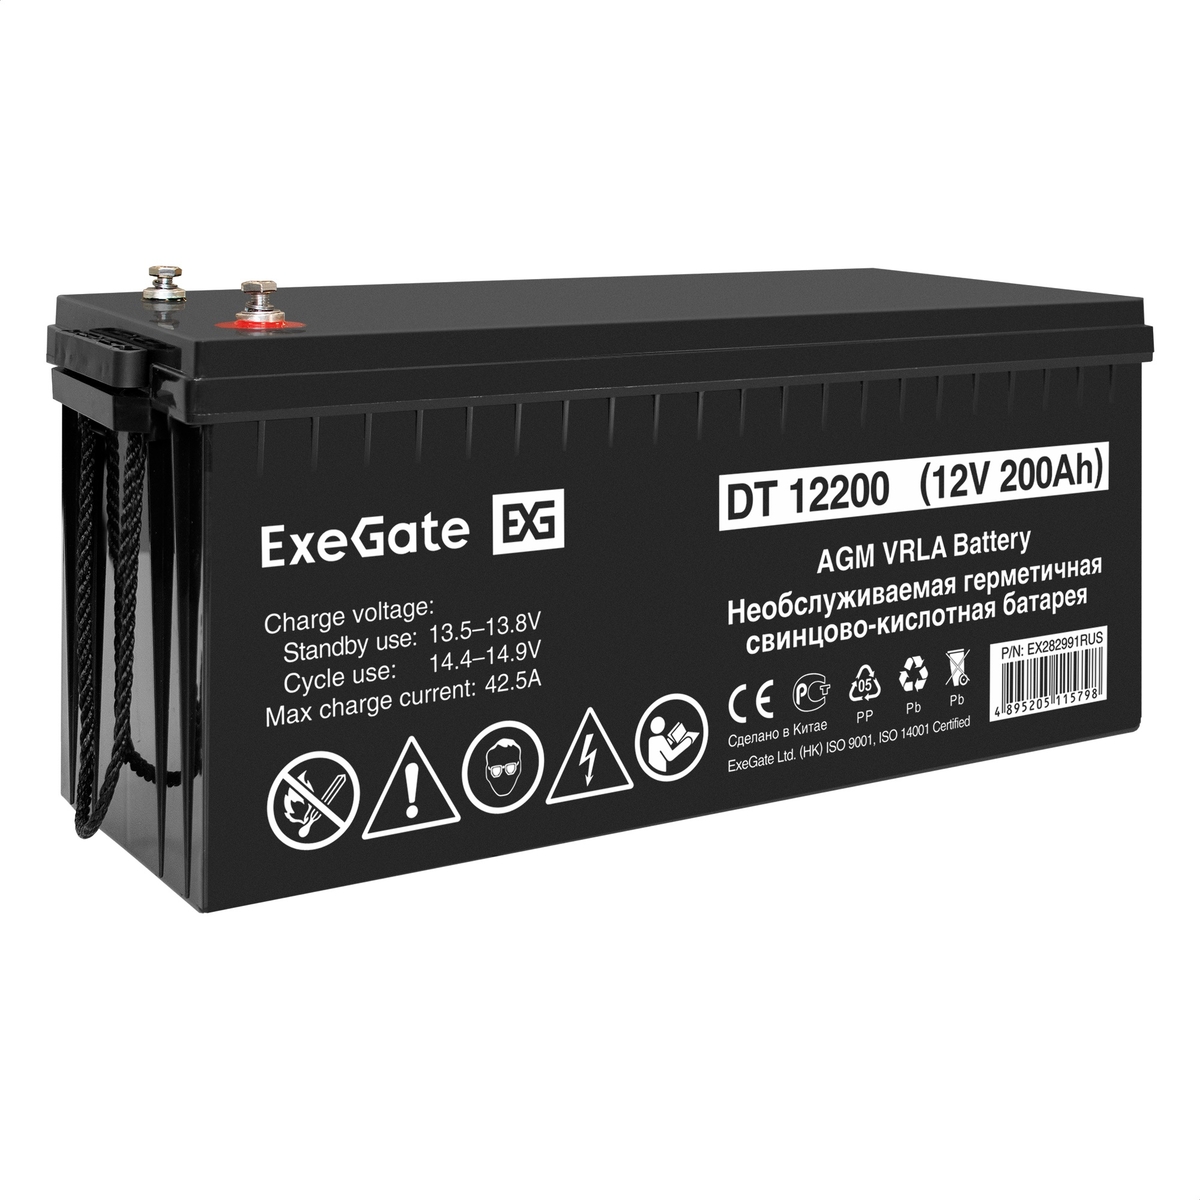 UPS set EX295996 + battery 200Ah EX282991 1 piece